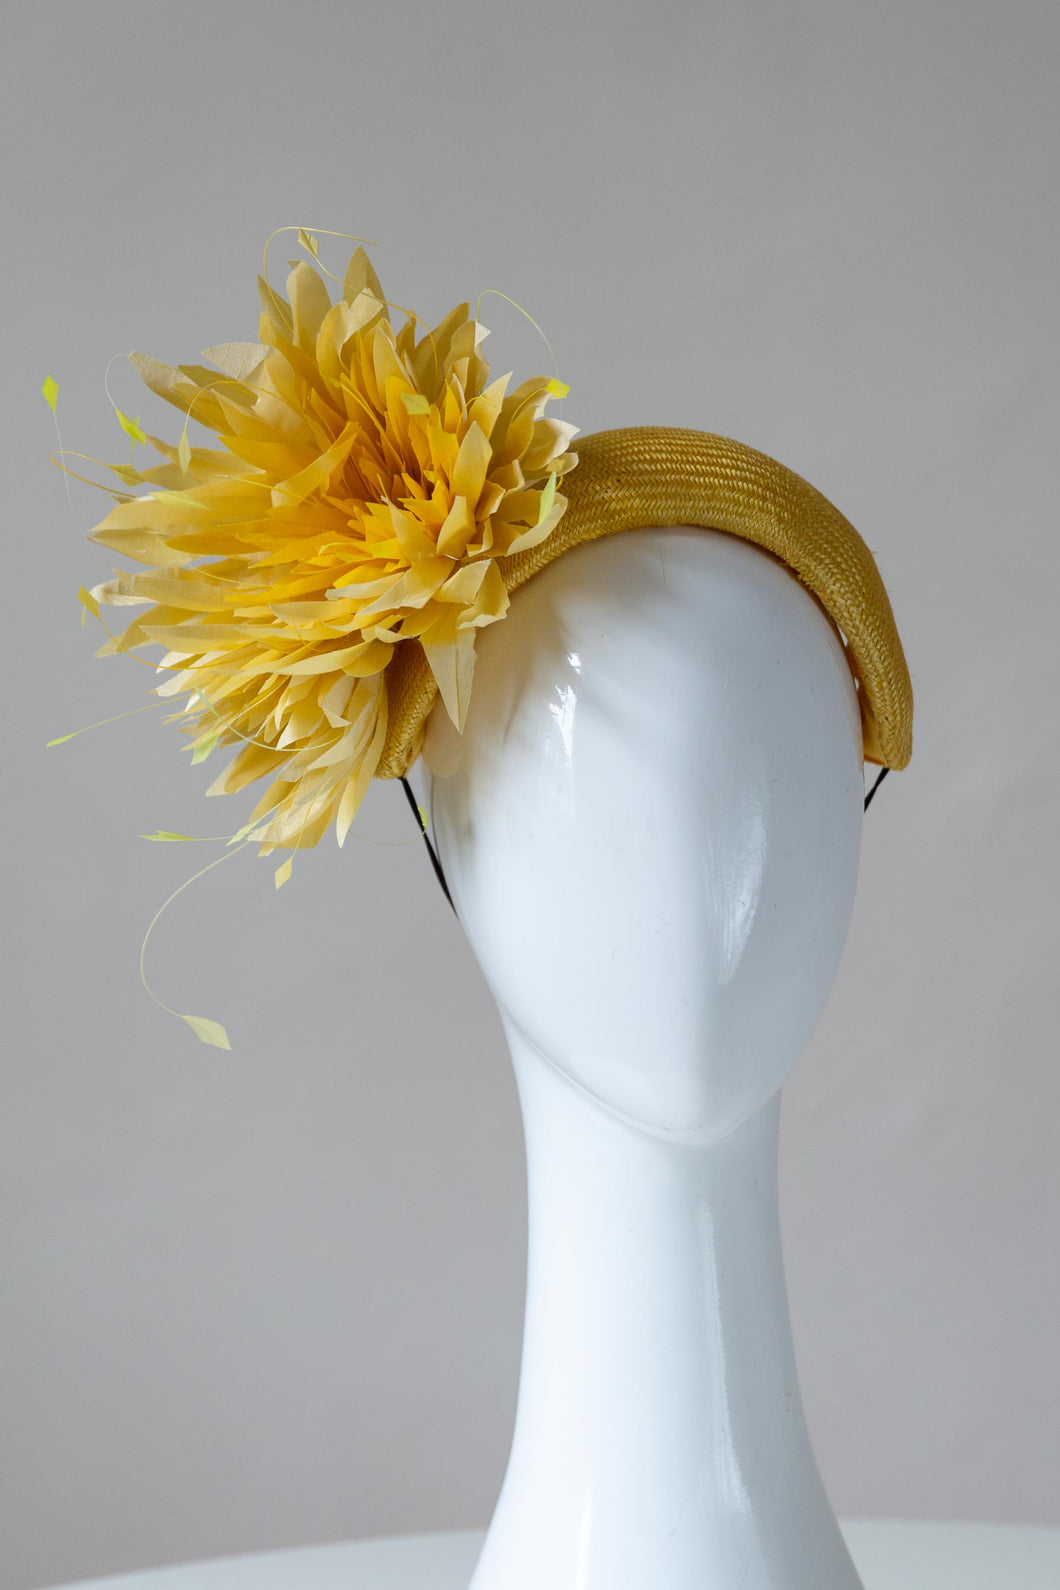 The Yellow Chrysanthemum Headband is a high quality straw headband with pom pom chrysanthemums